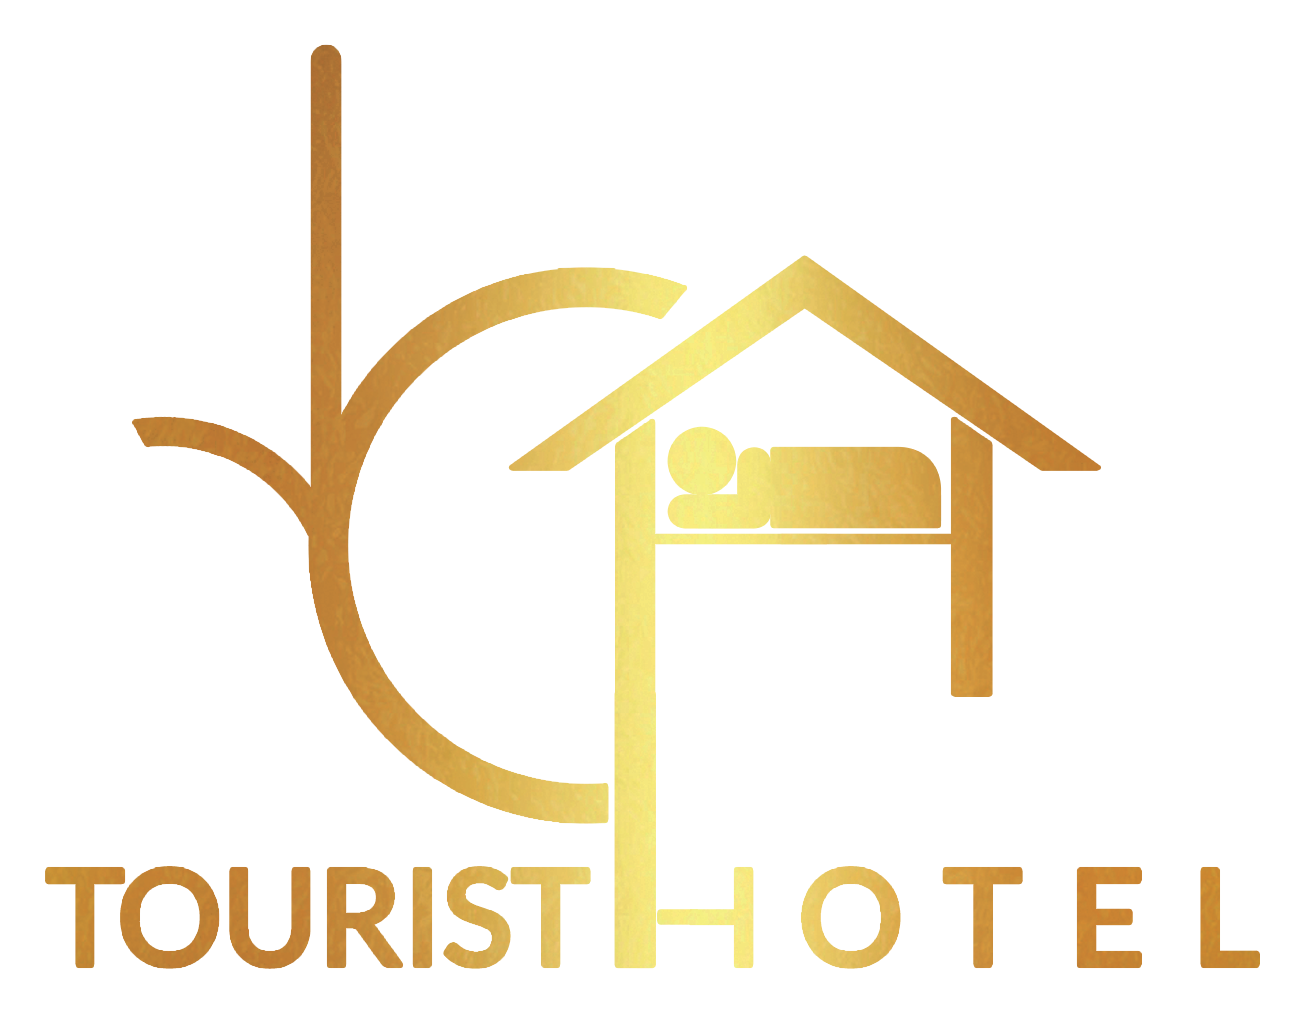 cairo best hotels - Hotel in cairo - cairo hotels - Tourist Hotel cairo egypy